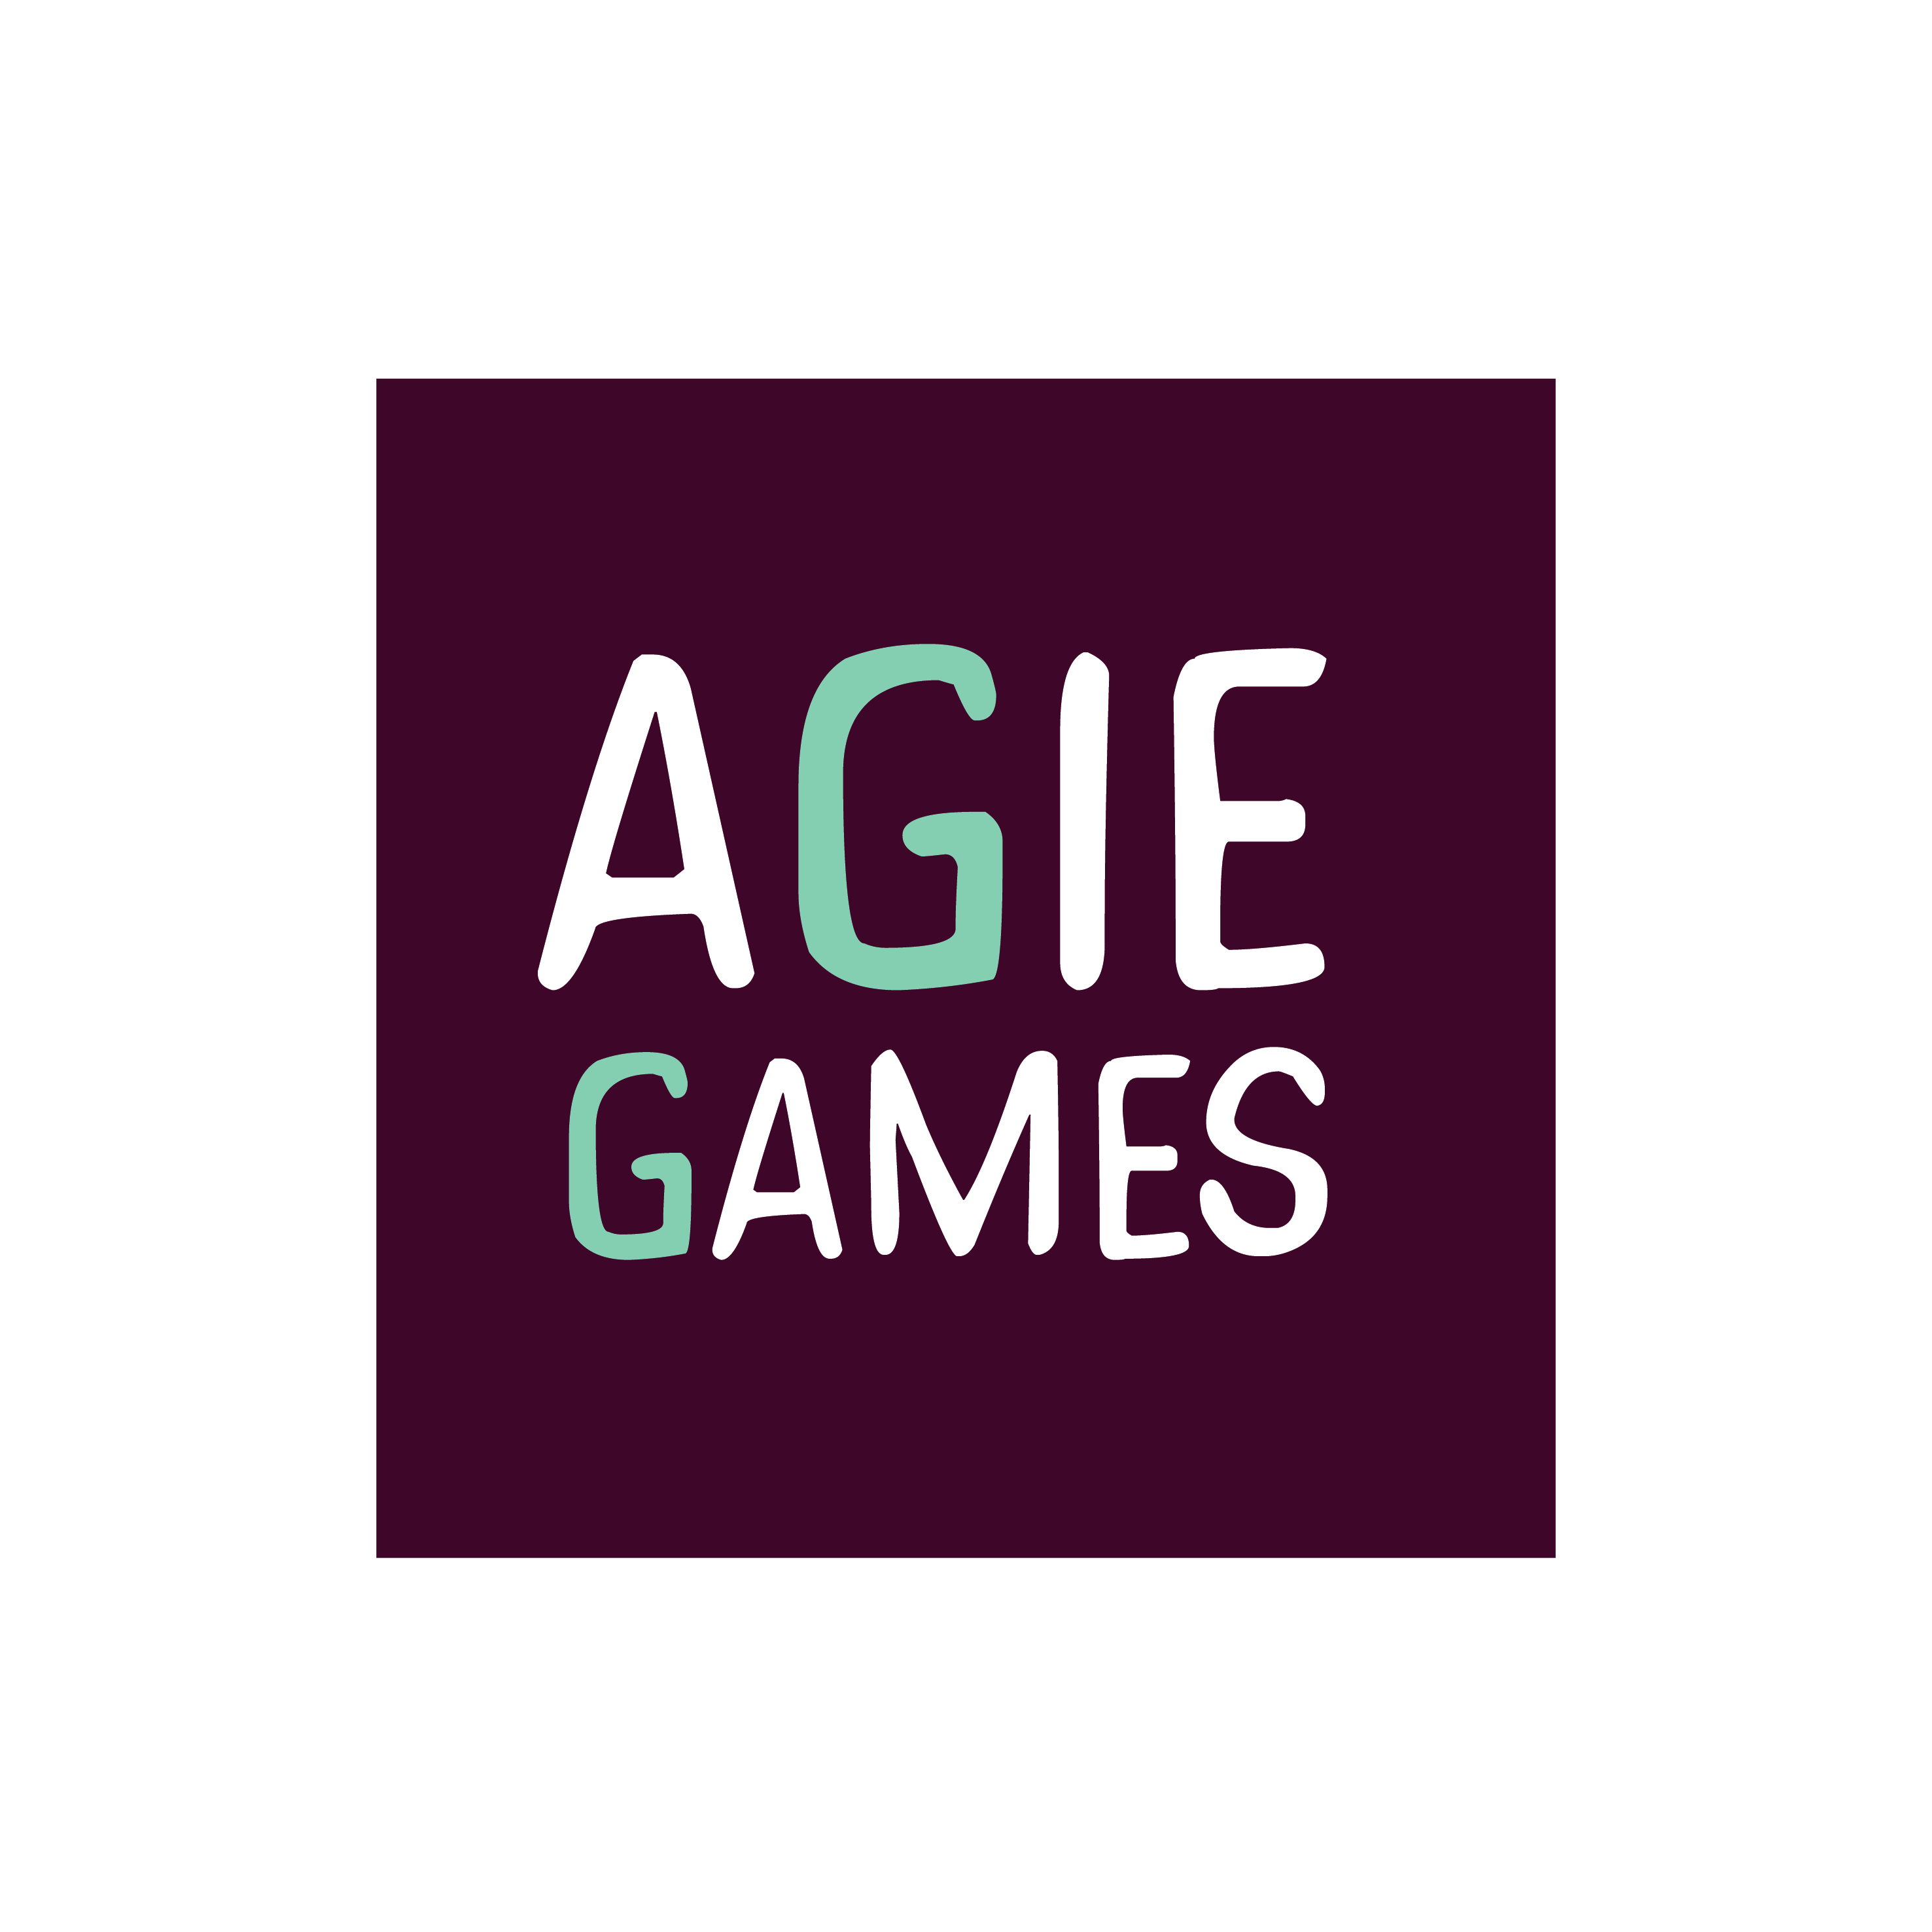 AGIE Games